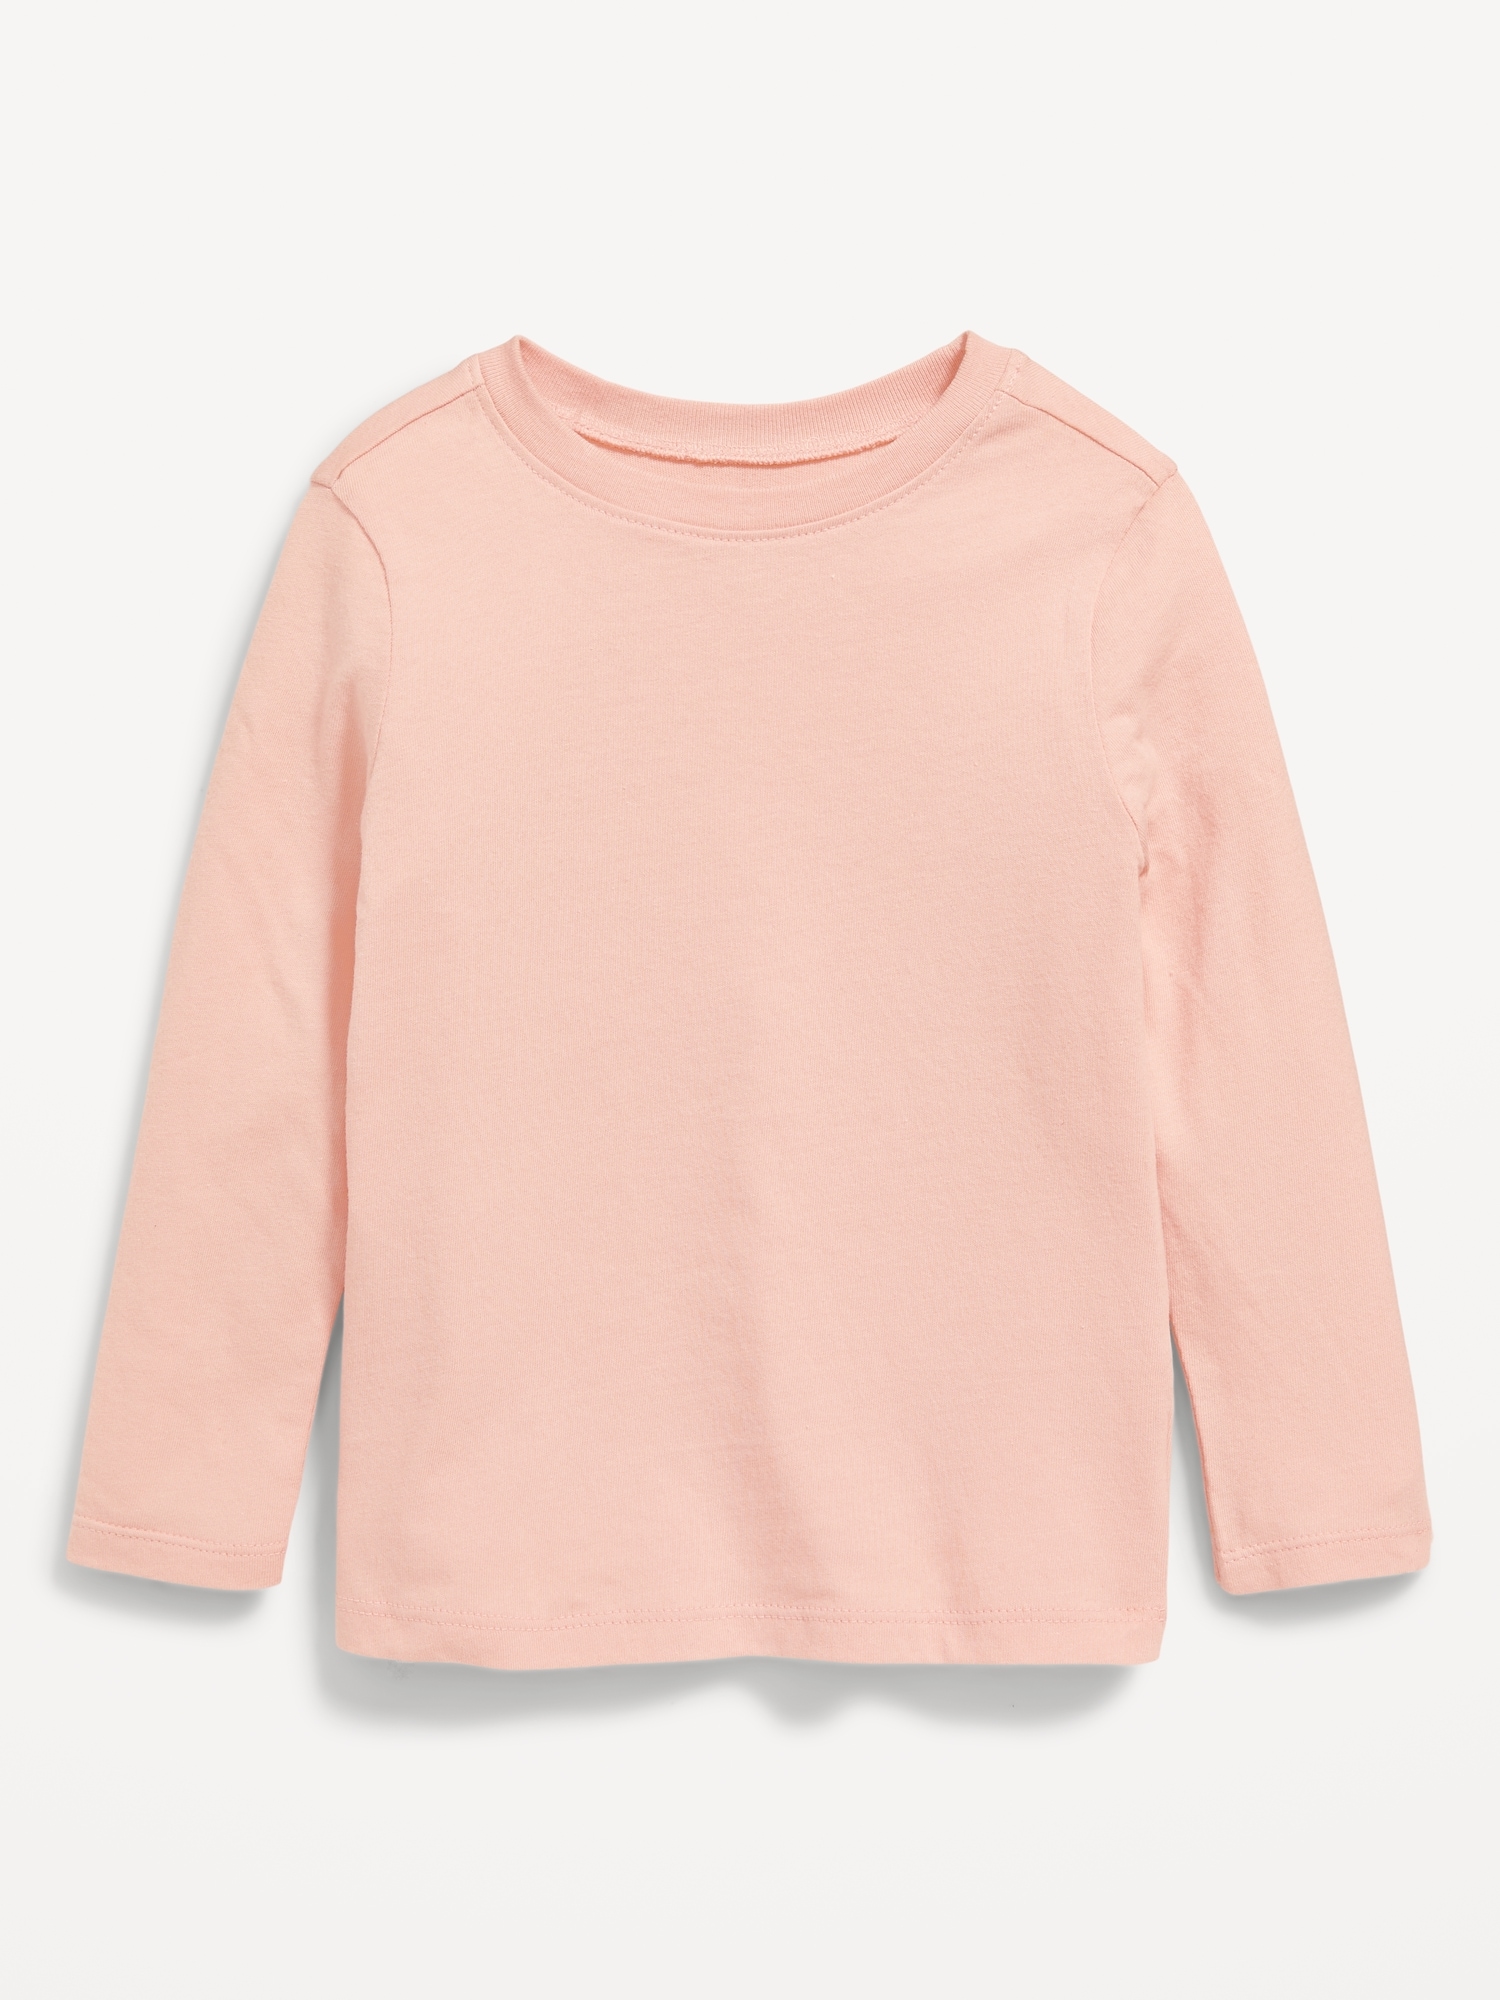 Unisex Long-Sleeve T-Shirt for Toddler | Old Navy